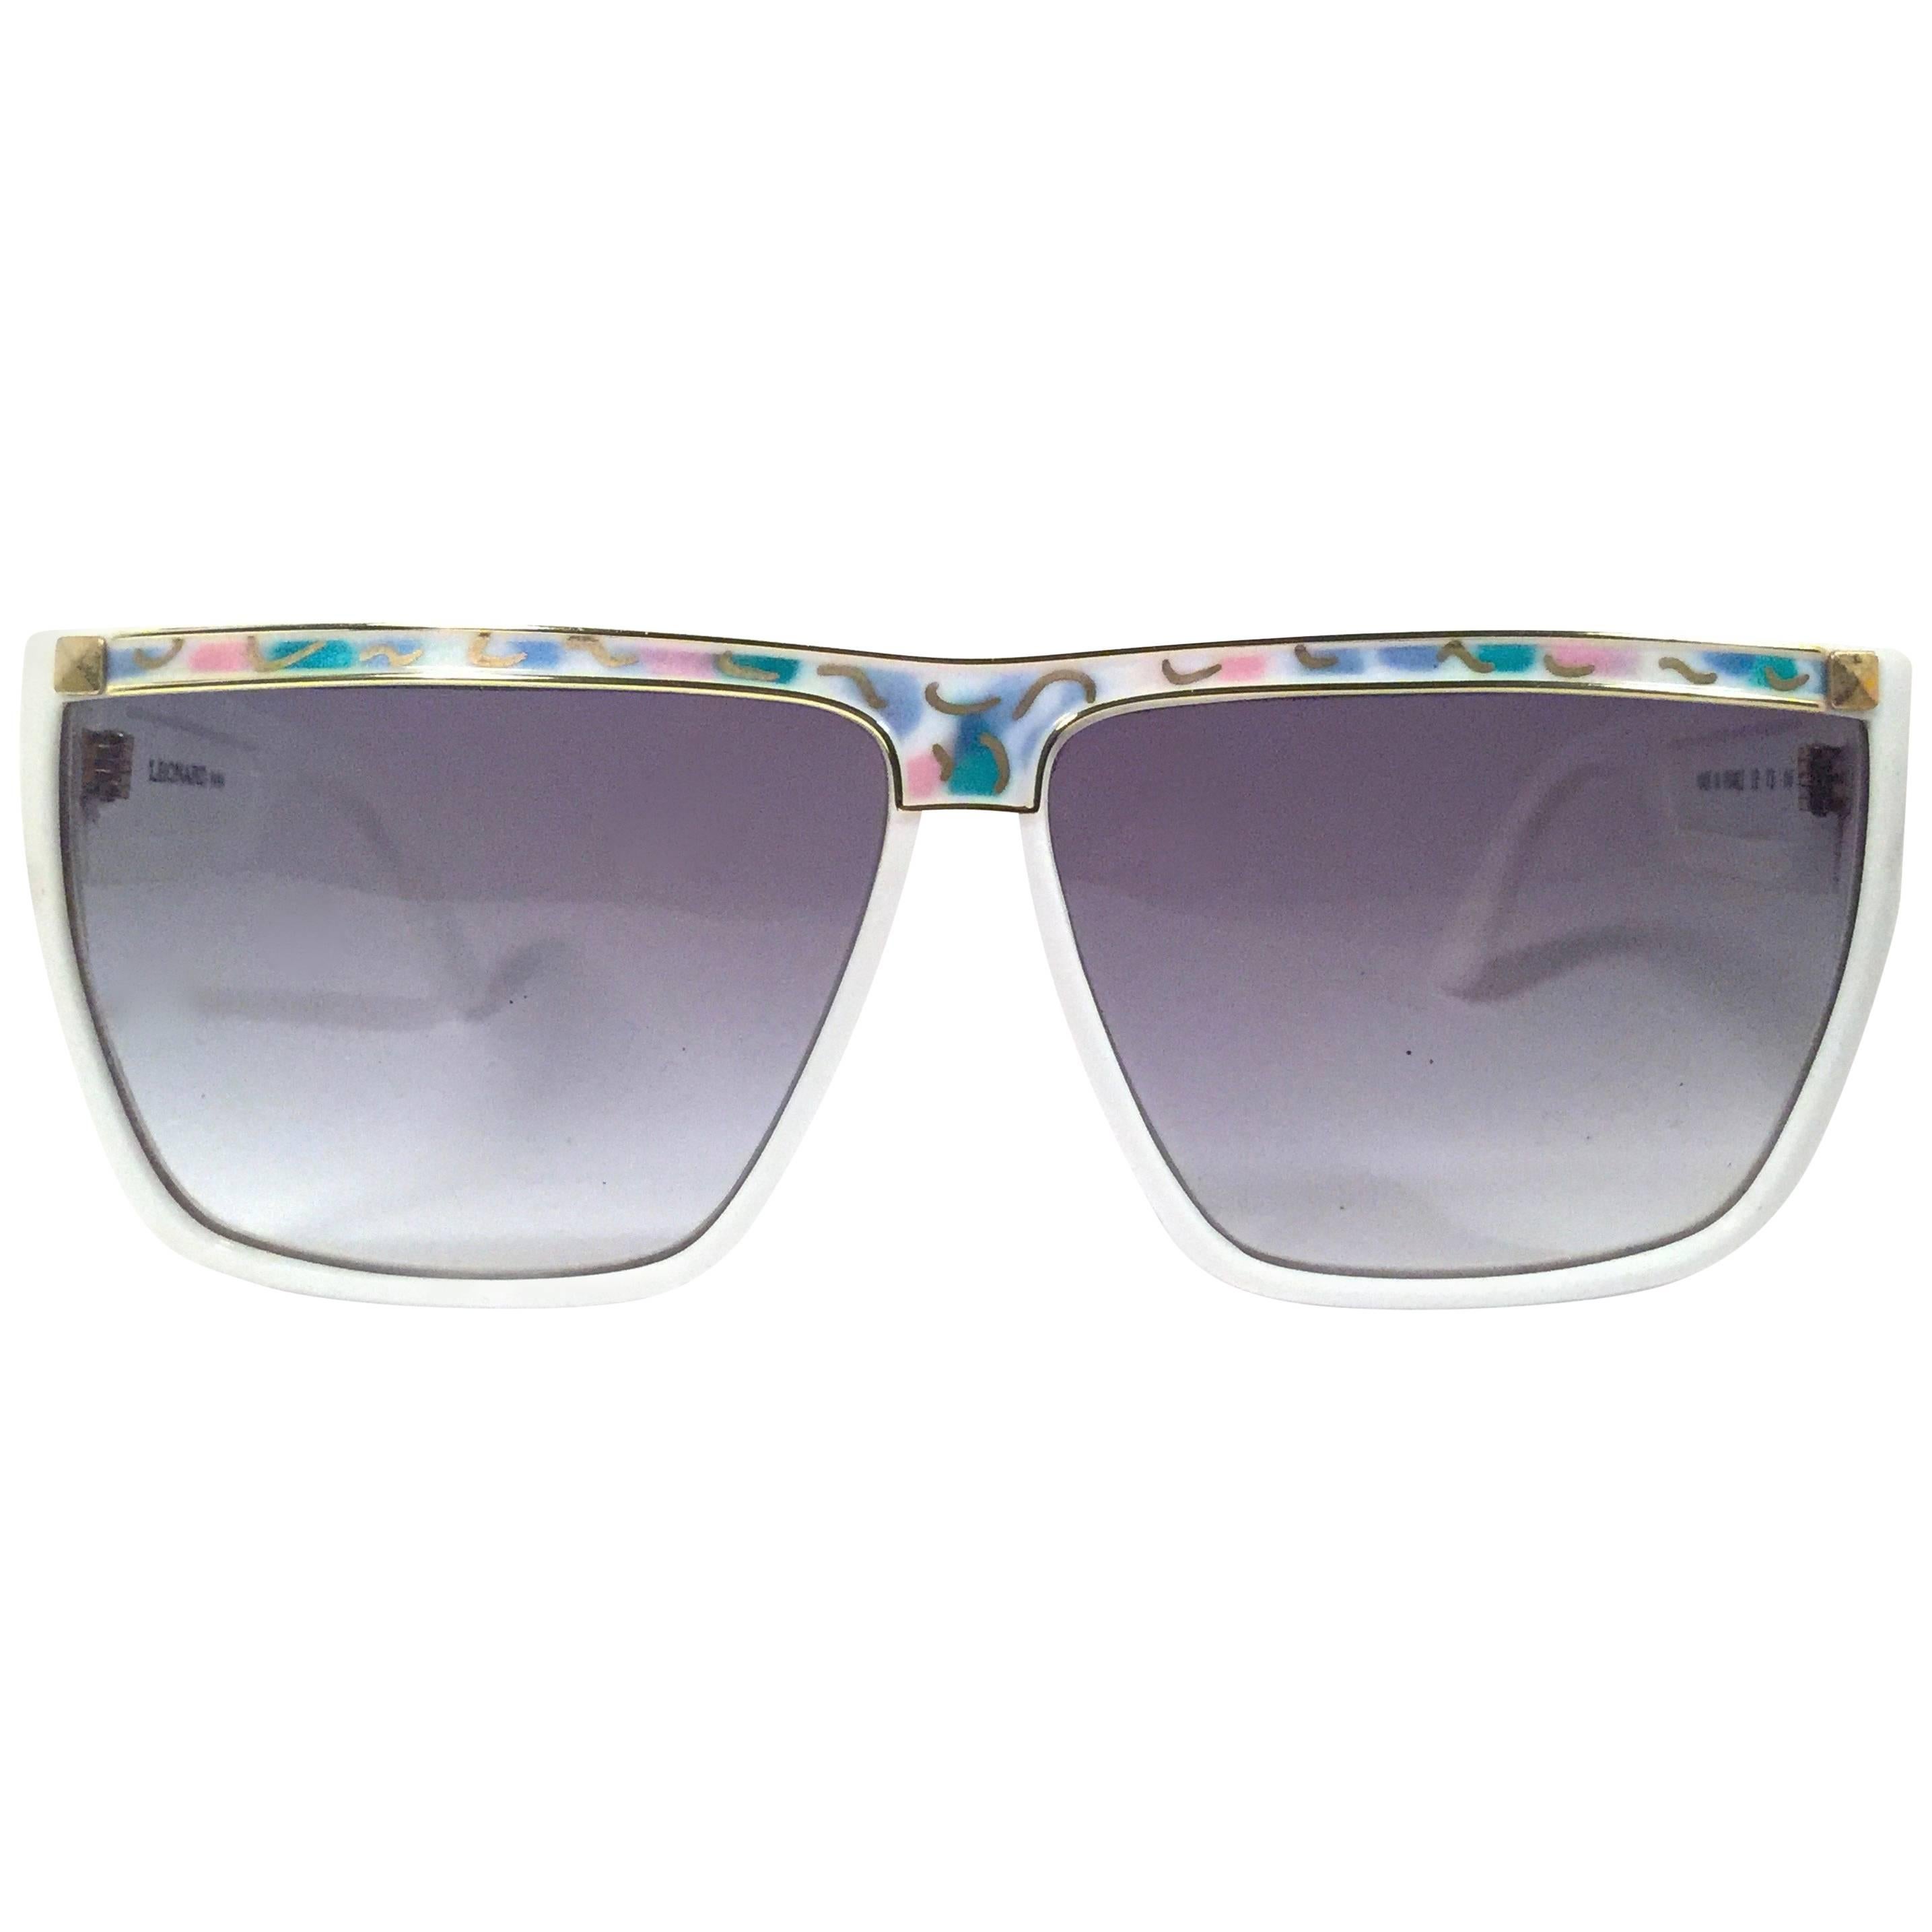 New Vintage Leonard LE1306 Translucent Mosaic 1970's France Sunglasses